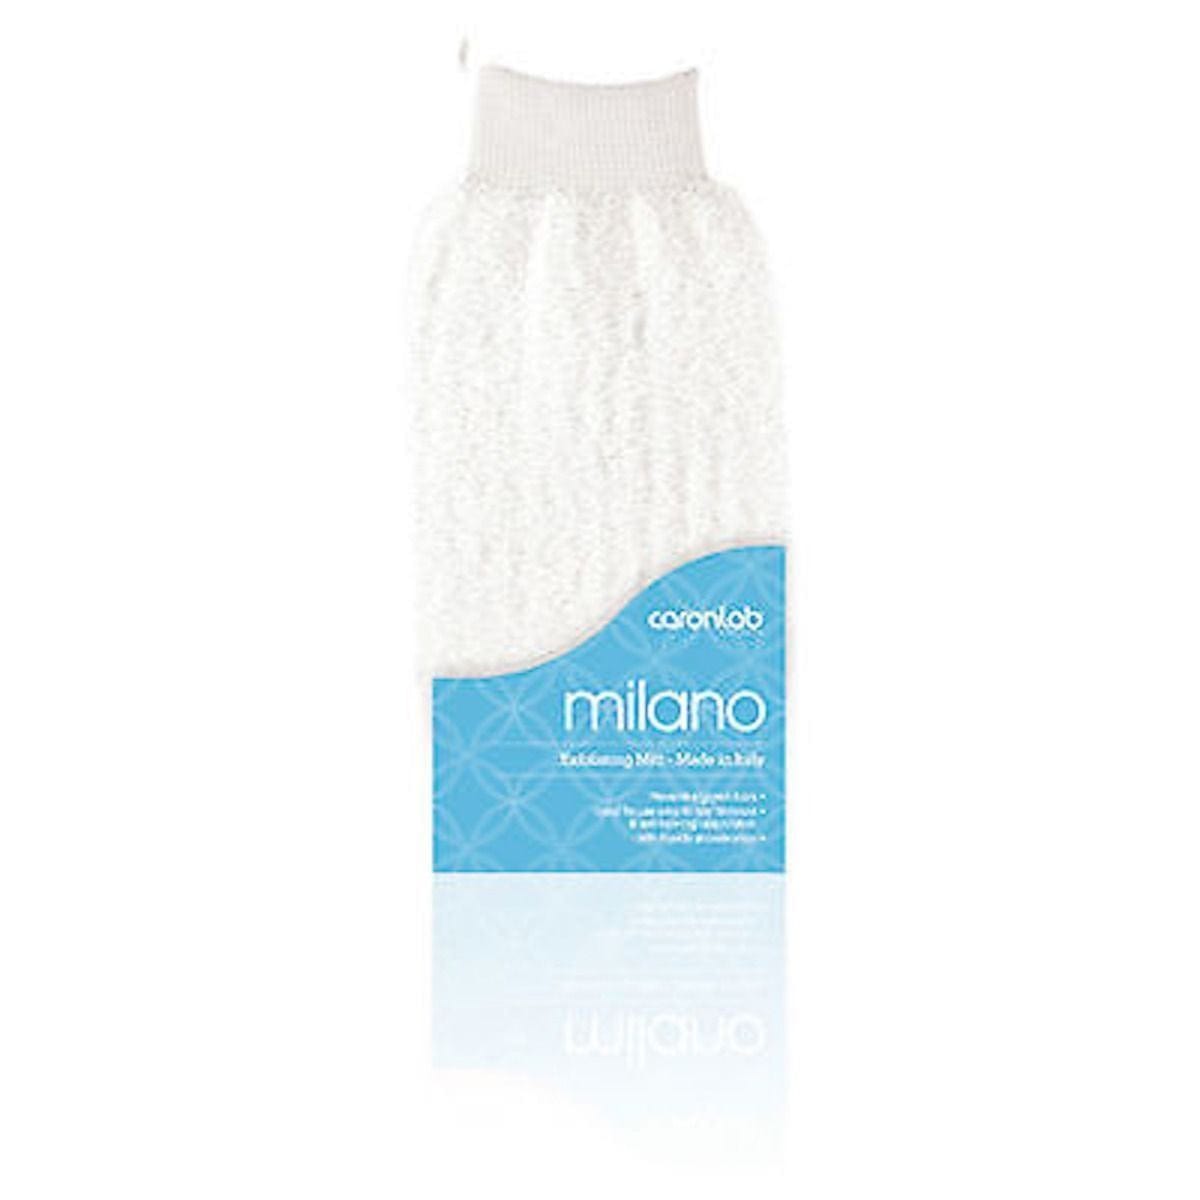 Milano Mitt White Beauty - Caron Lab - Luxe Pacifique